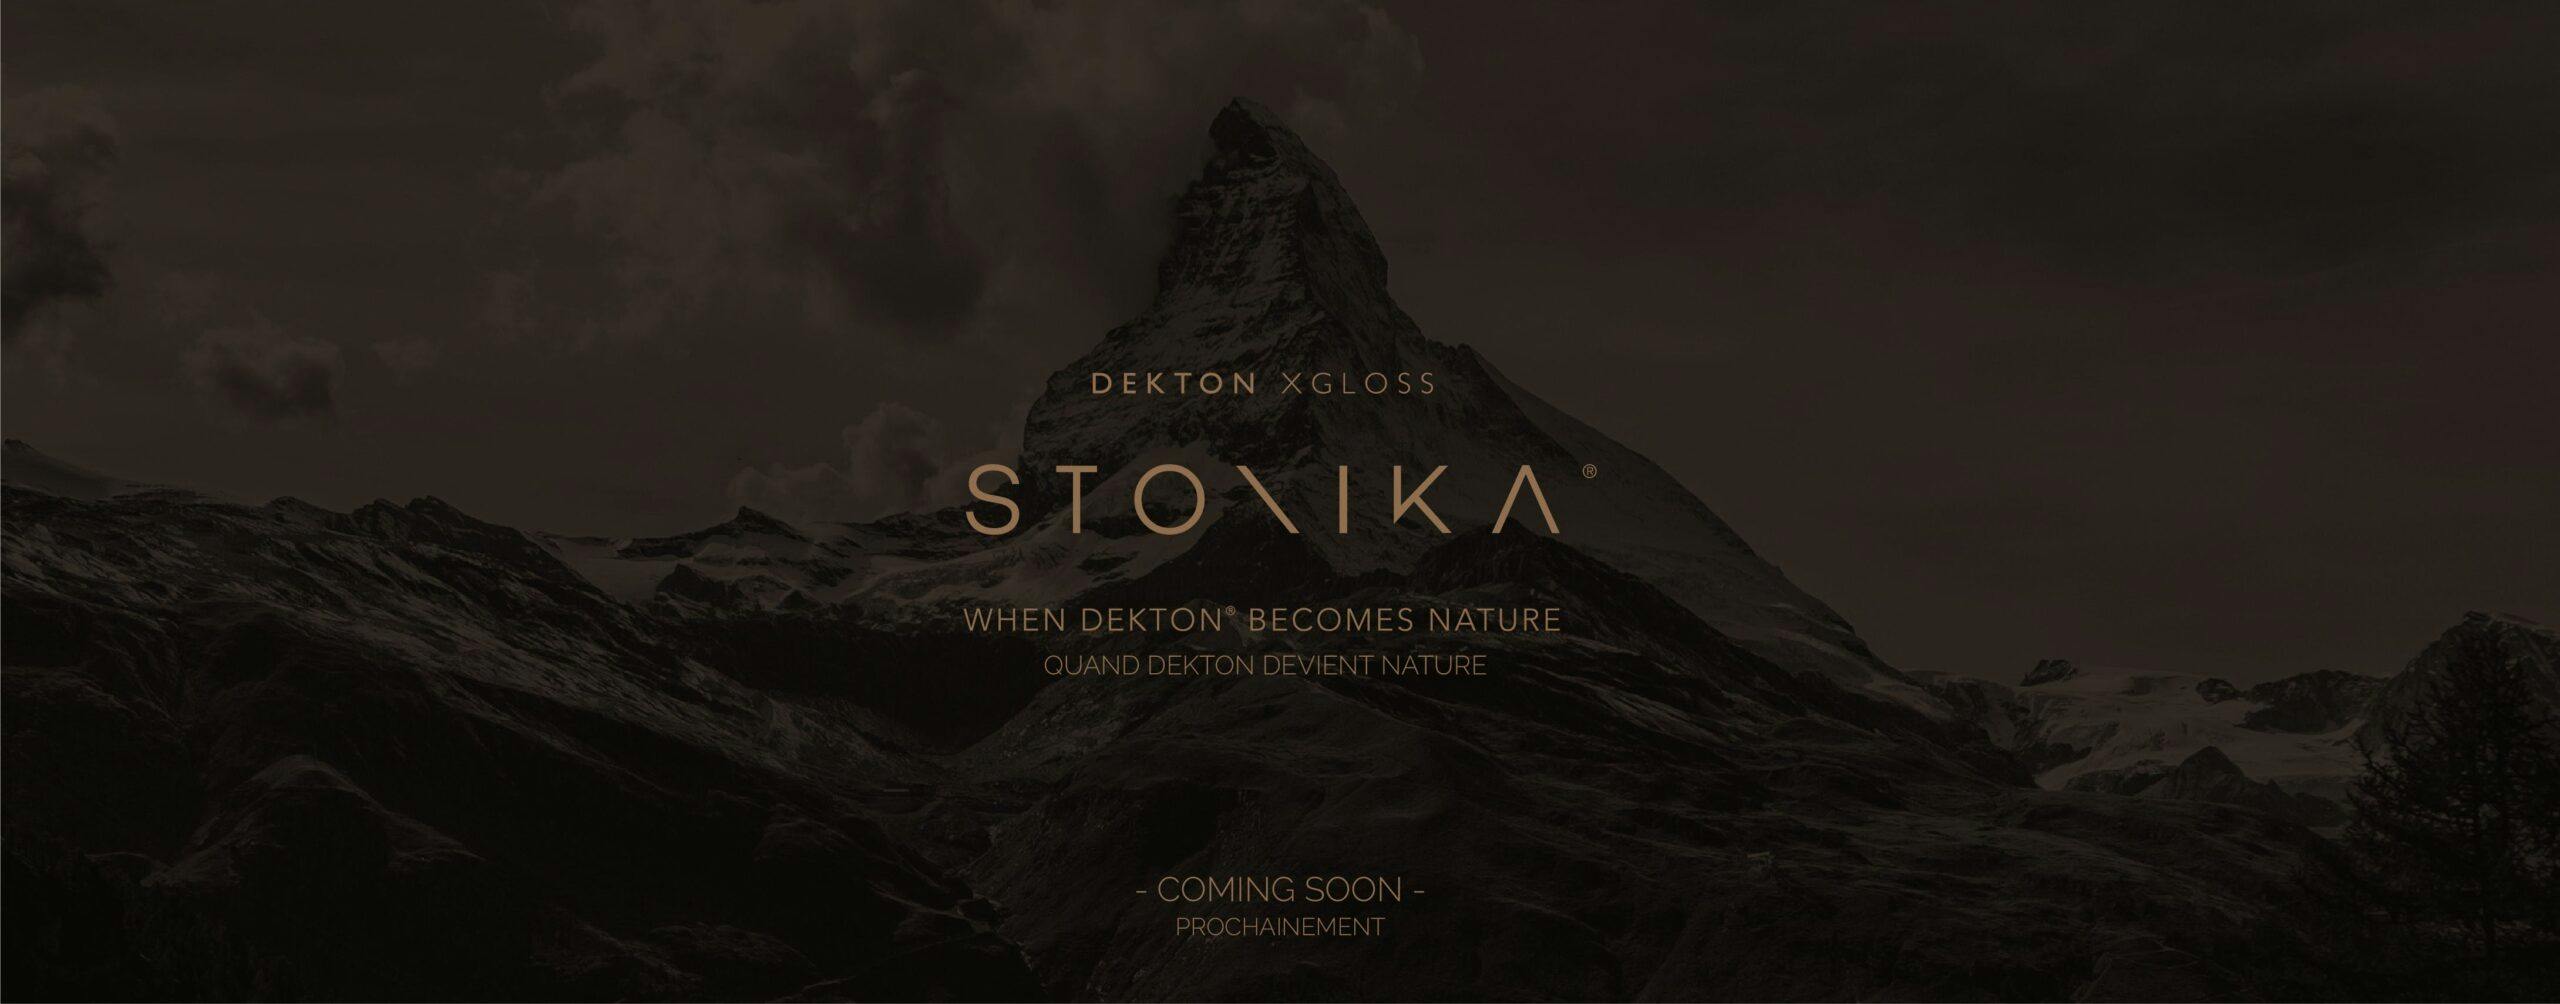 Numéro d'image 32 de la section actuelle de Cosentino lance la nouvelle Collection Dekton Stonika au Canada de Cosentino Canada